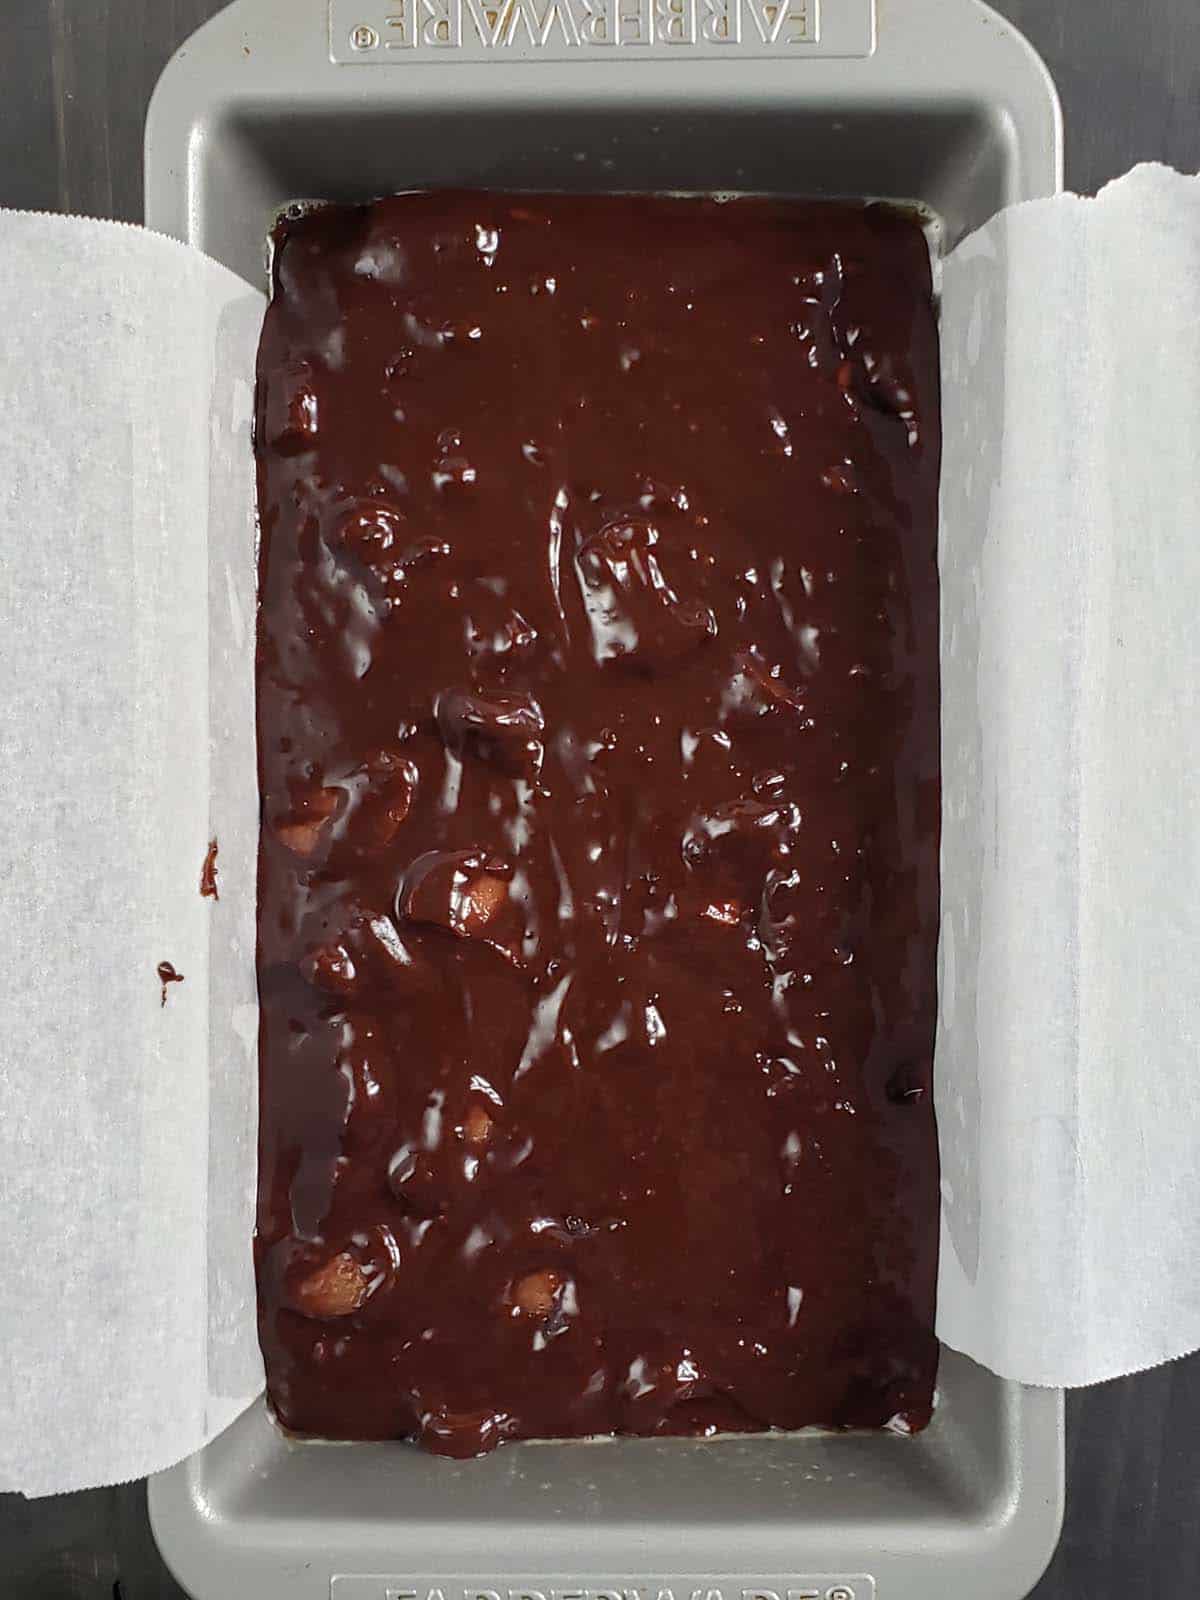 Chocolate rhubarb cake batter in a loaf pan.